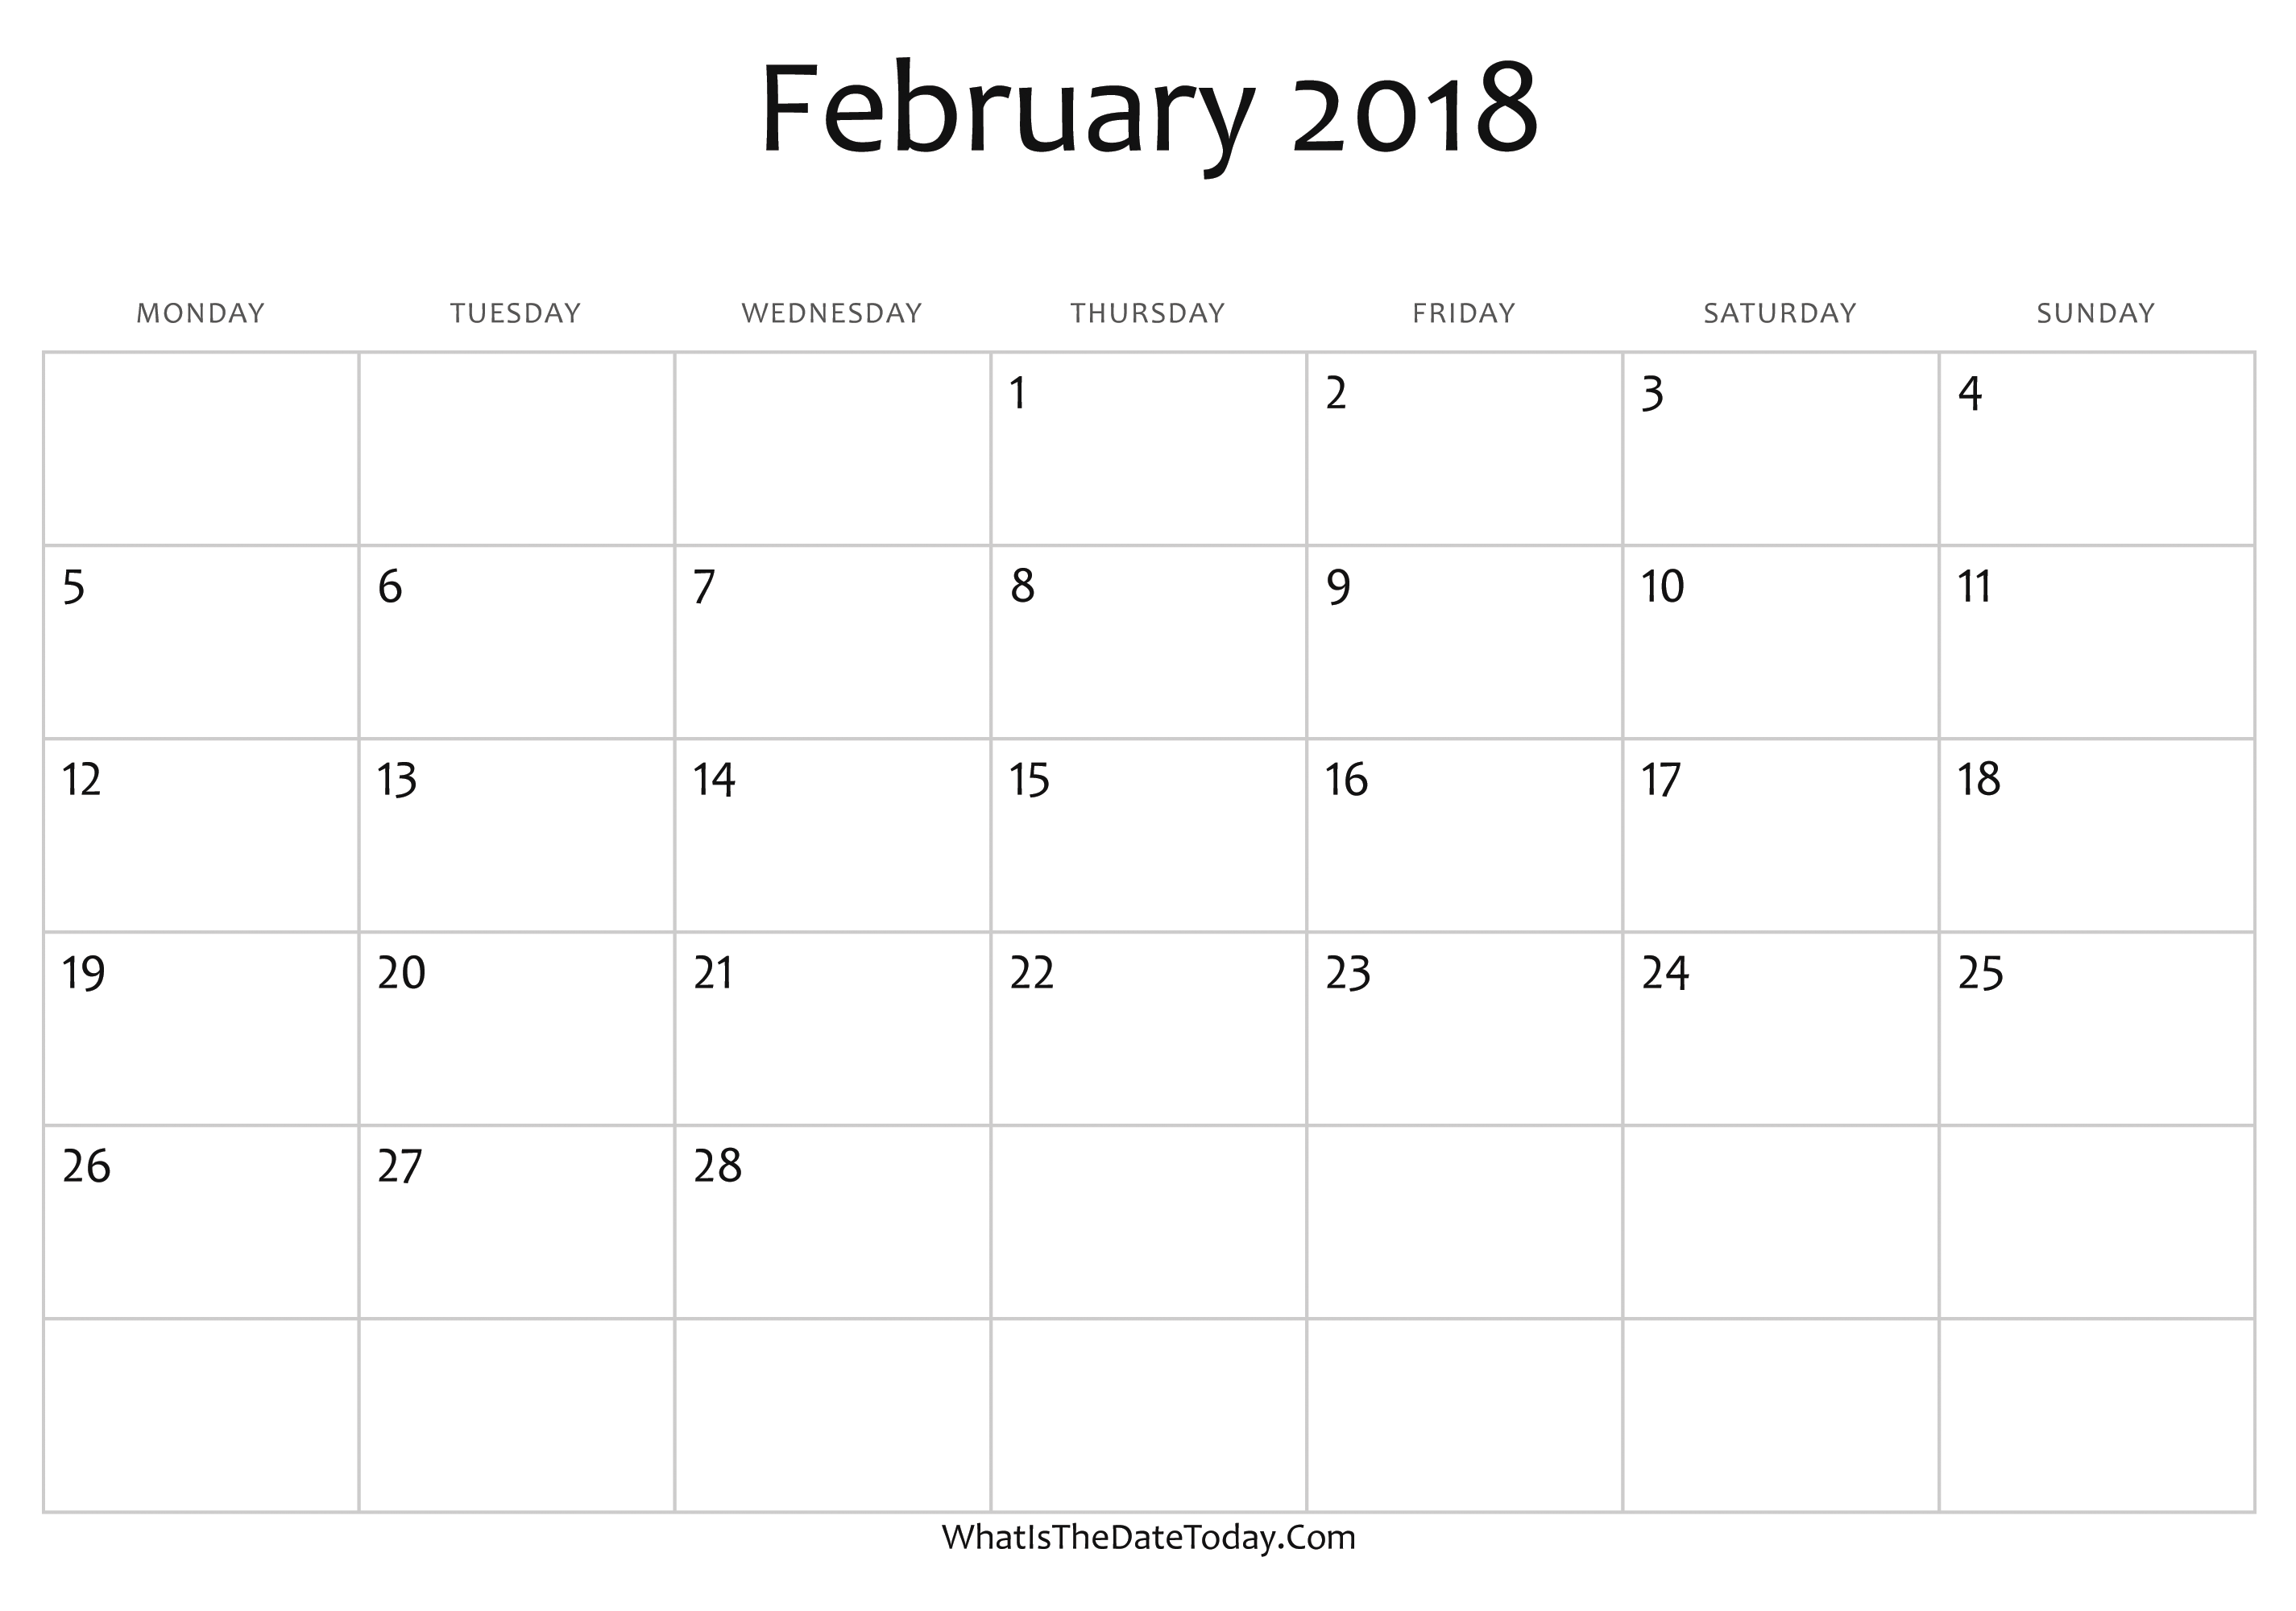 2018 Blank Calendar Templates Download Free Printable 2018 Blank 